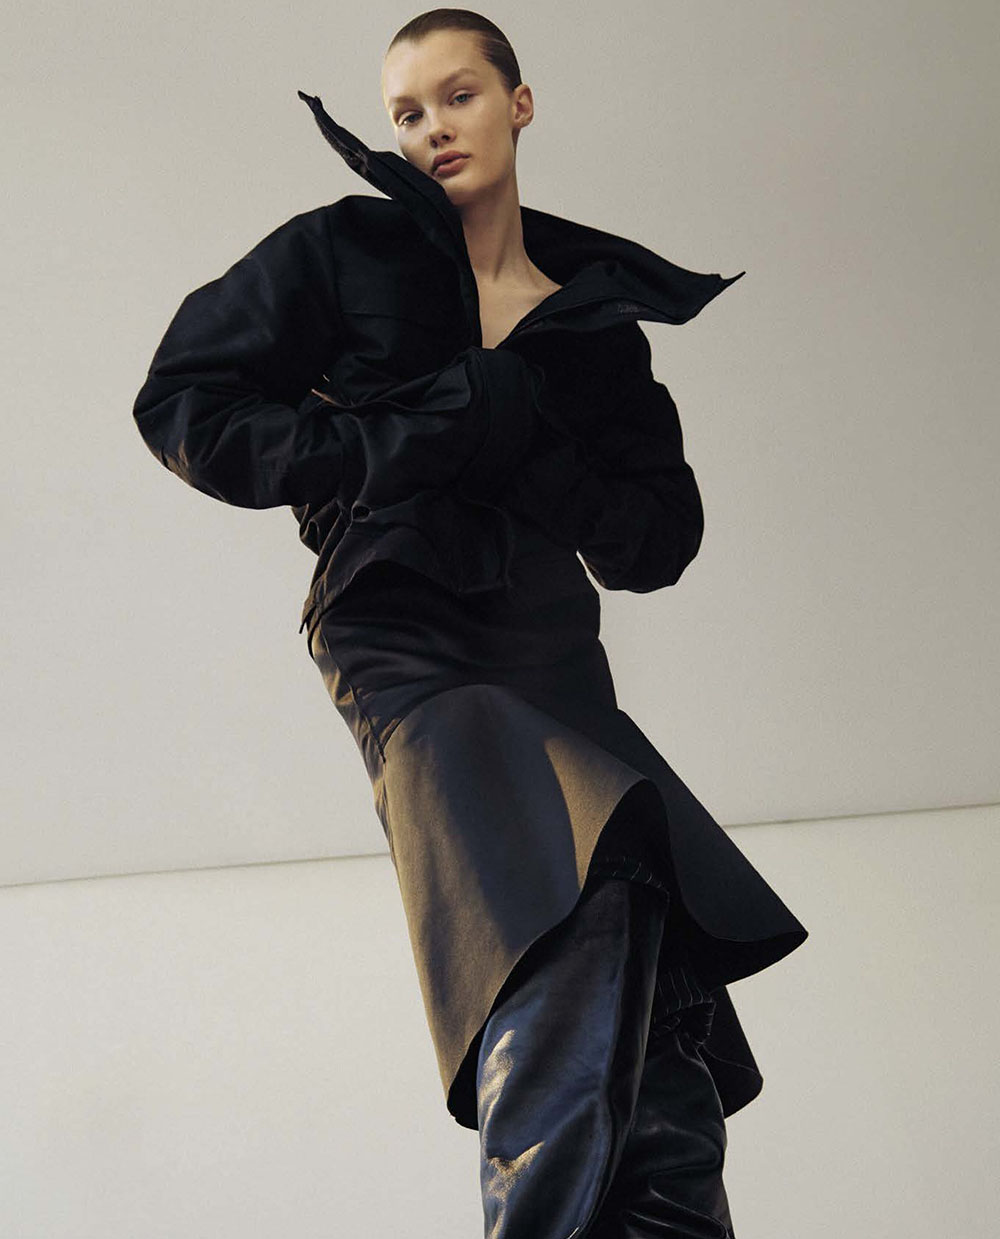 Kris Grikaite by Brianna Capozzi for Vogue Italia April 2019